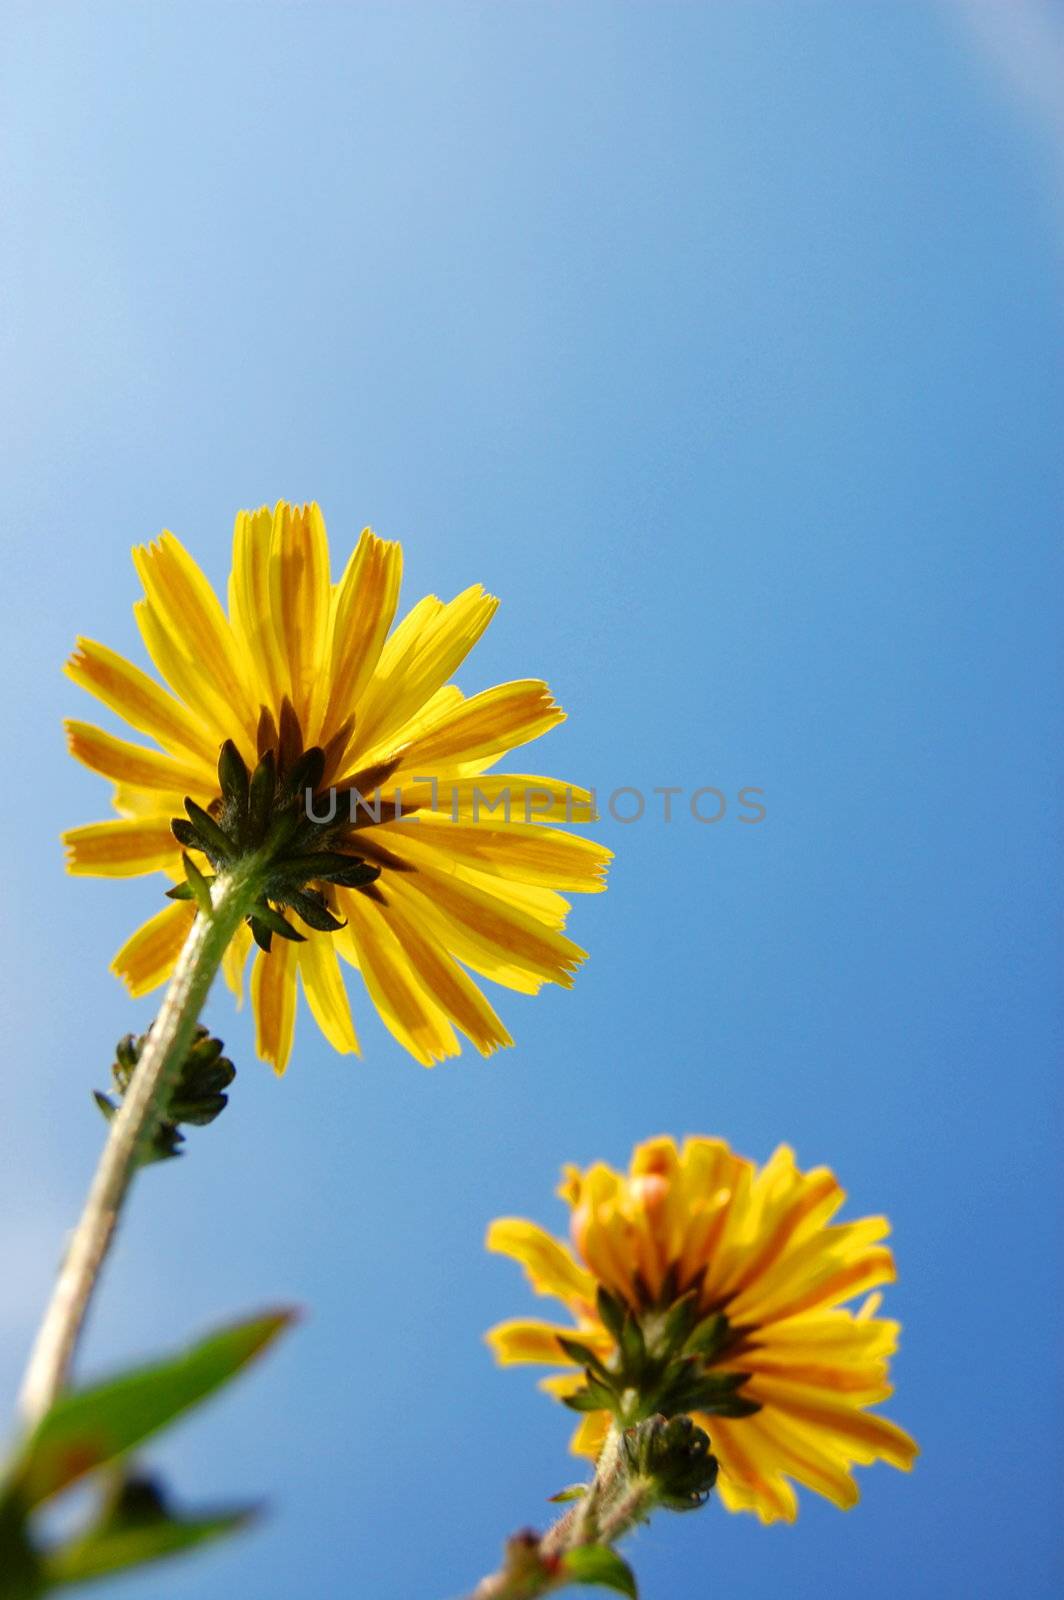 flower under blue summer sky by gunnar3000